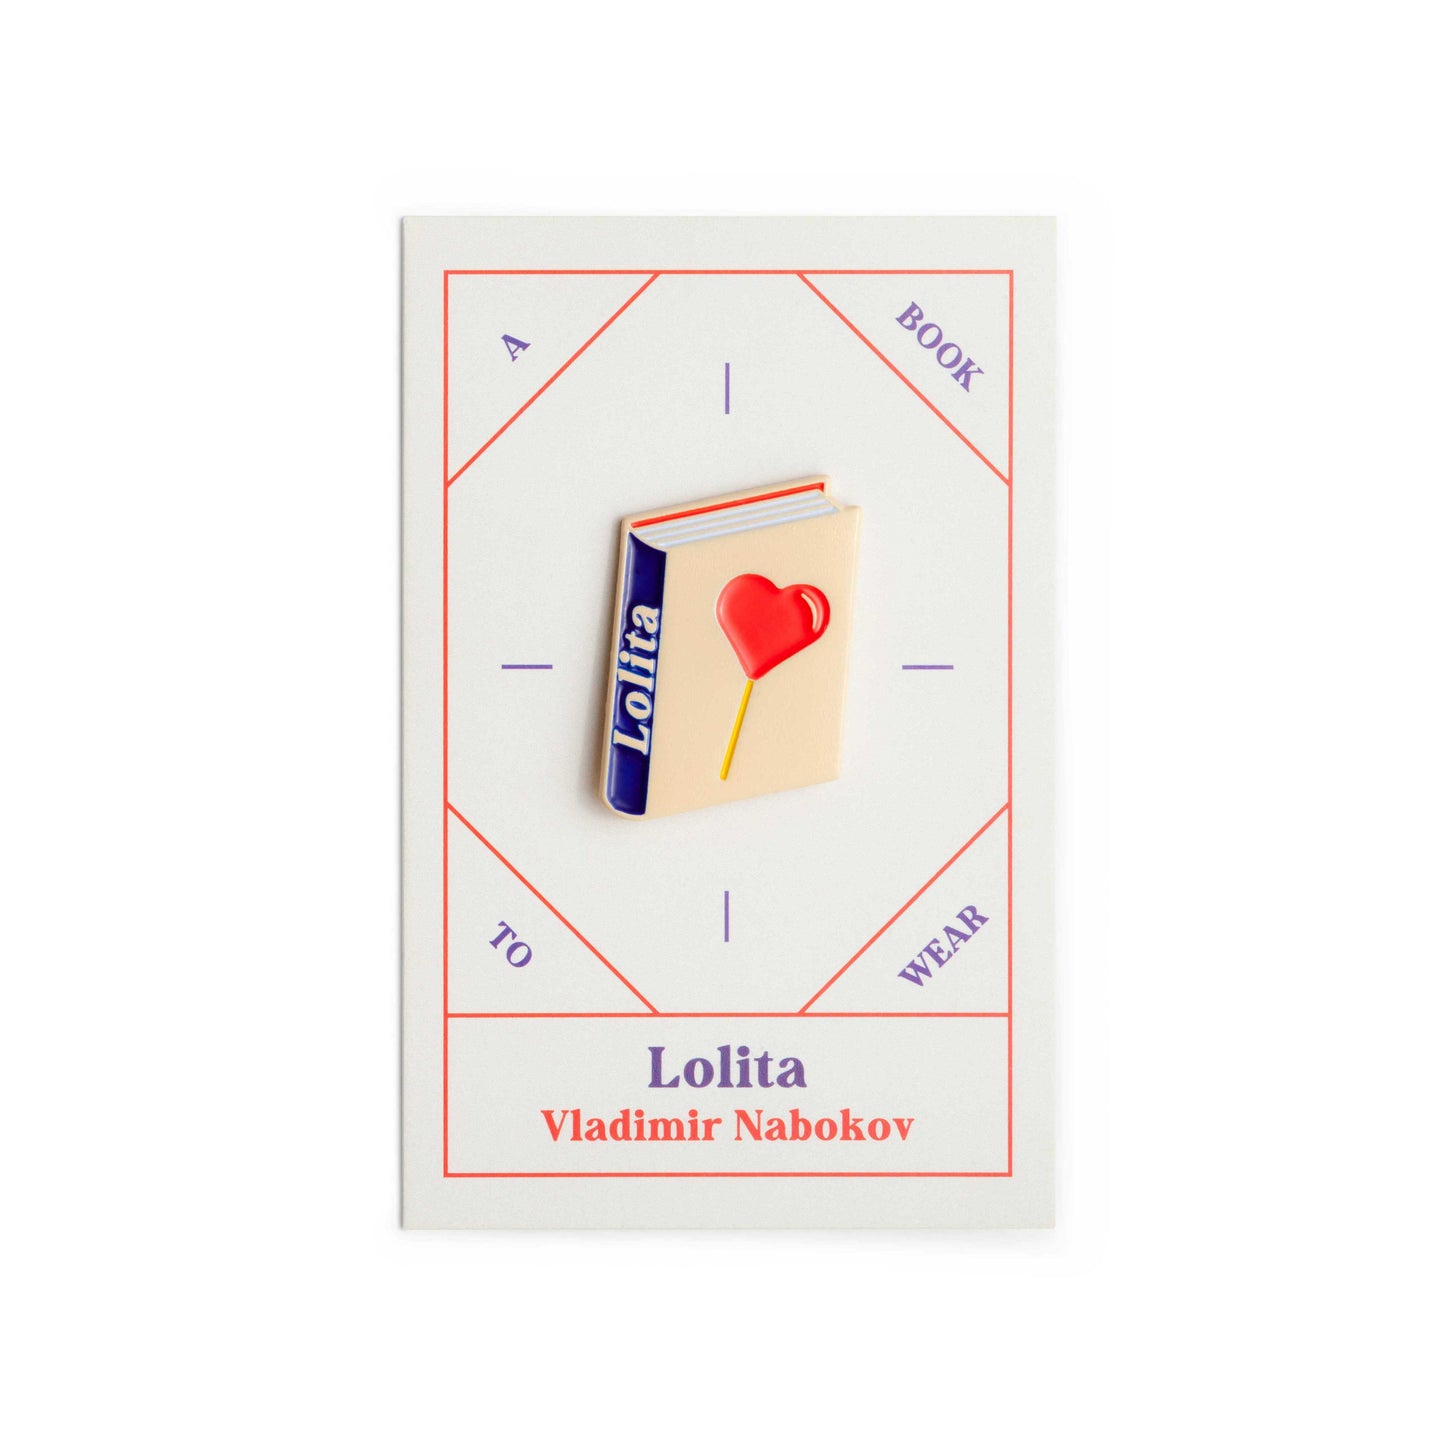 Lolita Book by Vladimir Nabokov Enamel Pin by Judy Kaufmann with packaging